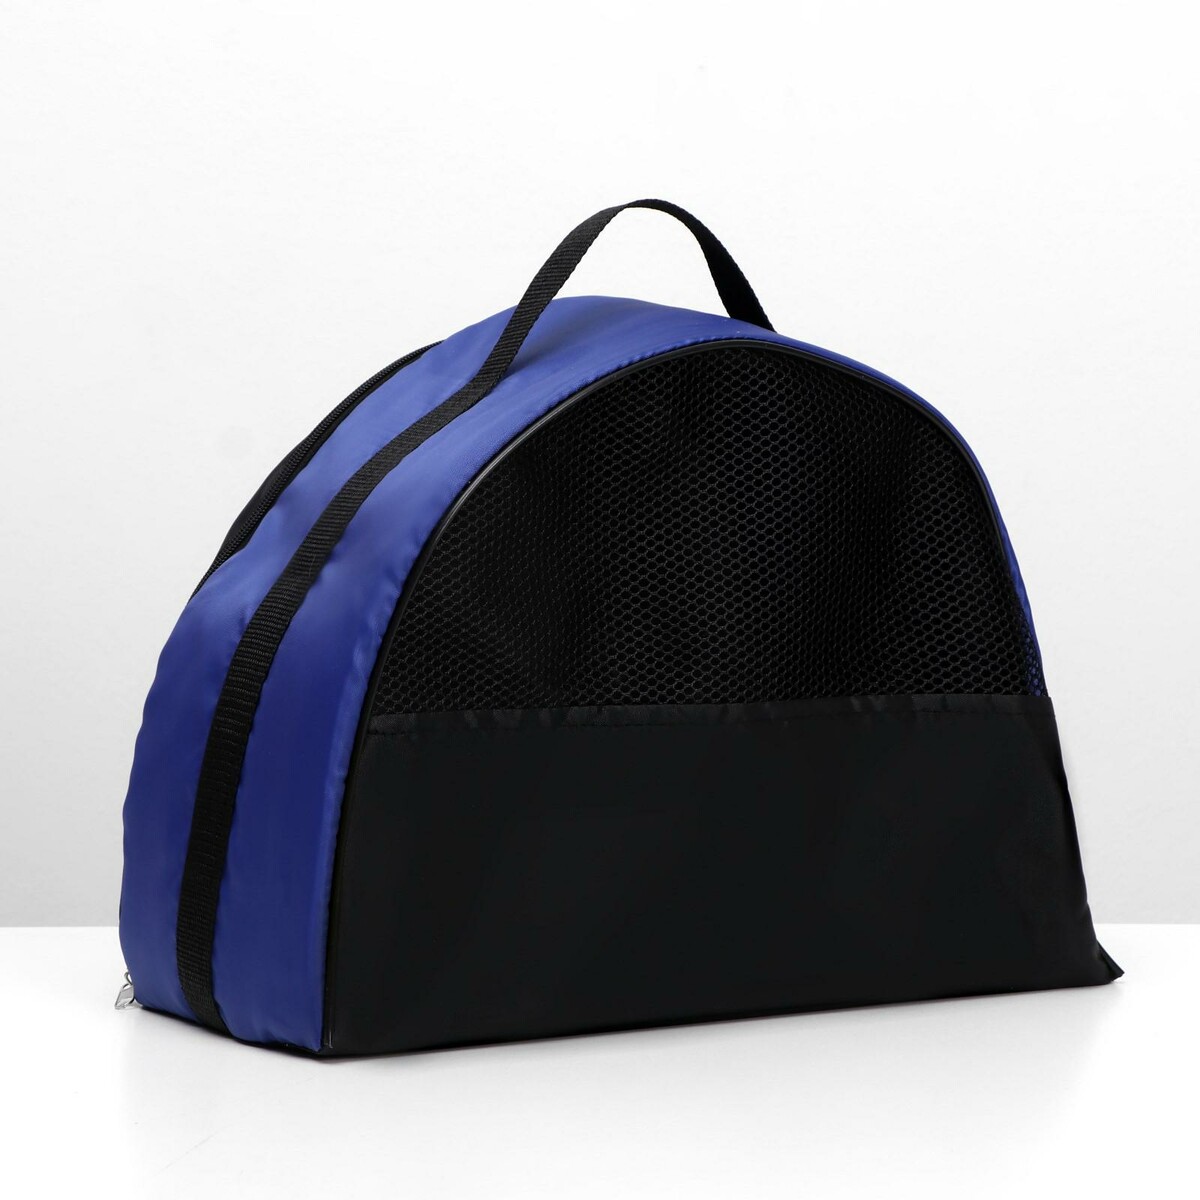 Сумка - переноска для животных, оксфорд, 39 х 19 х 27 см, синяя сумка переноска для животных оксфорд 36 х 17 х 25 см красная